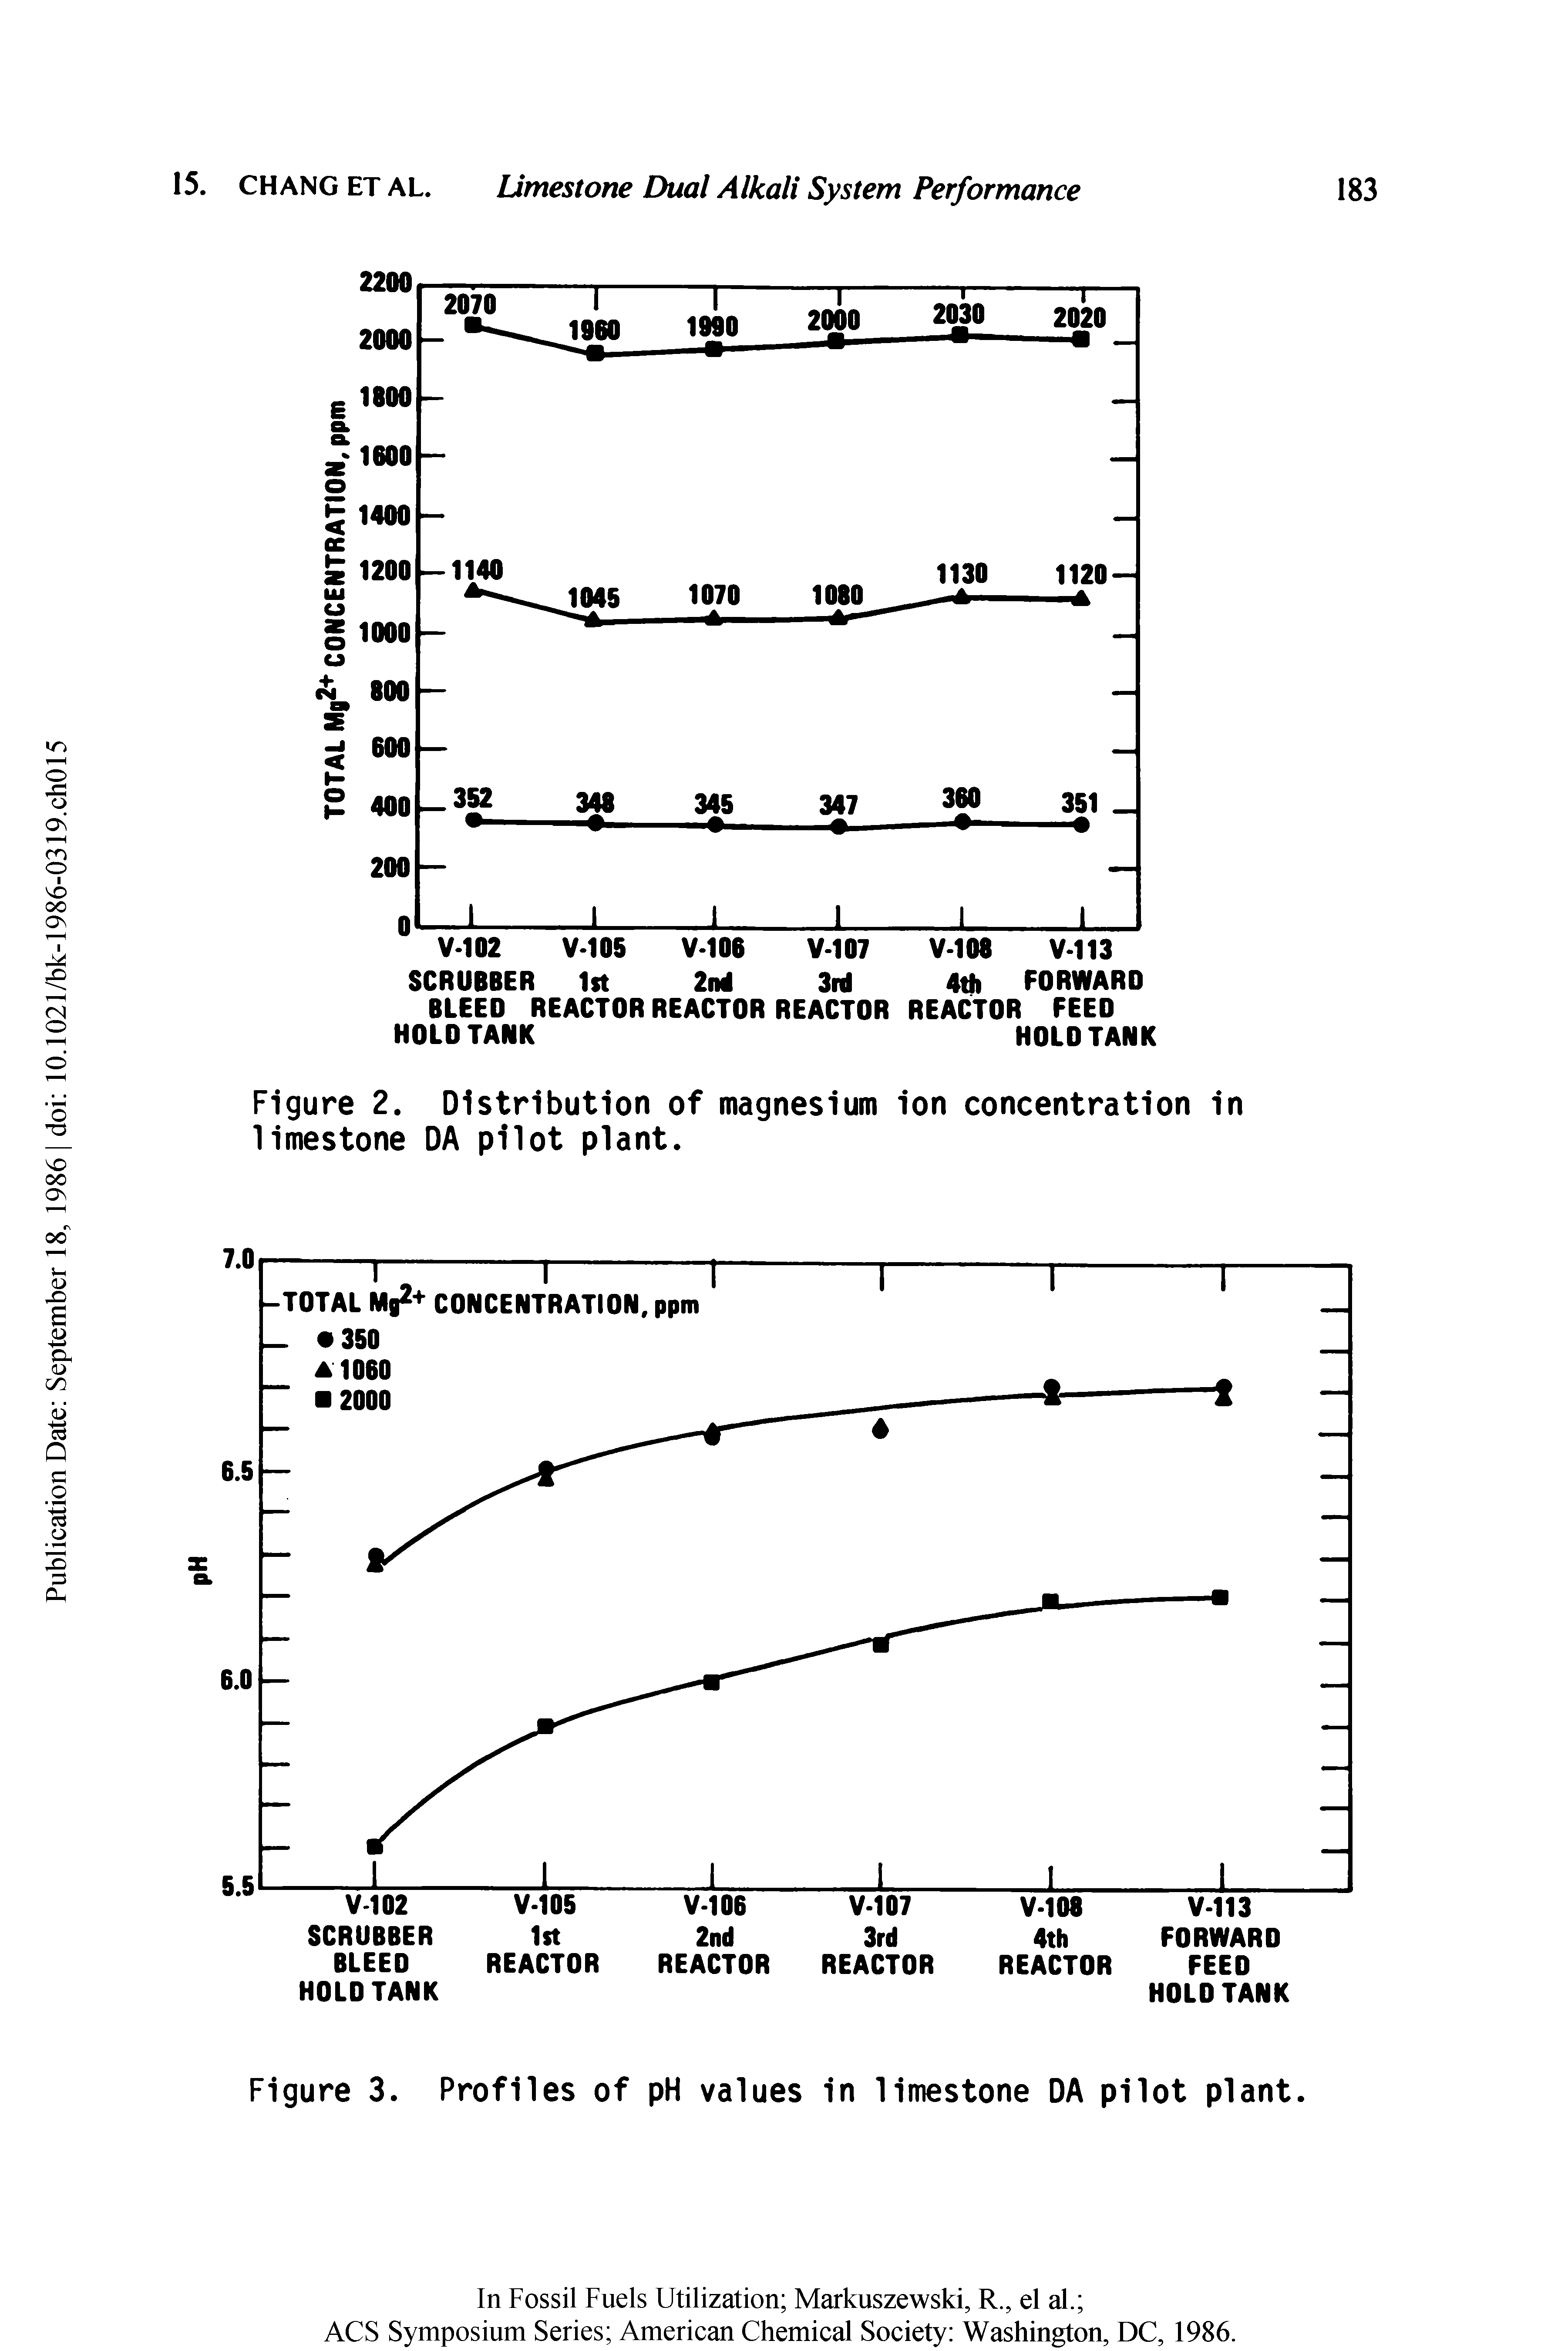 Figure 2. Distribution of magnesium ion concentration in limestone DA pilot plant.